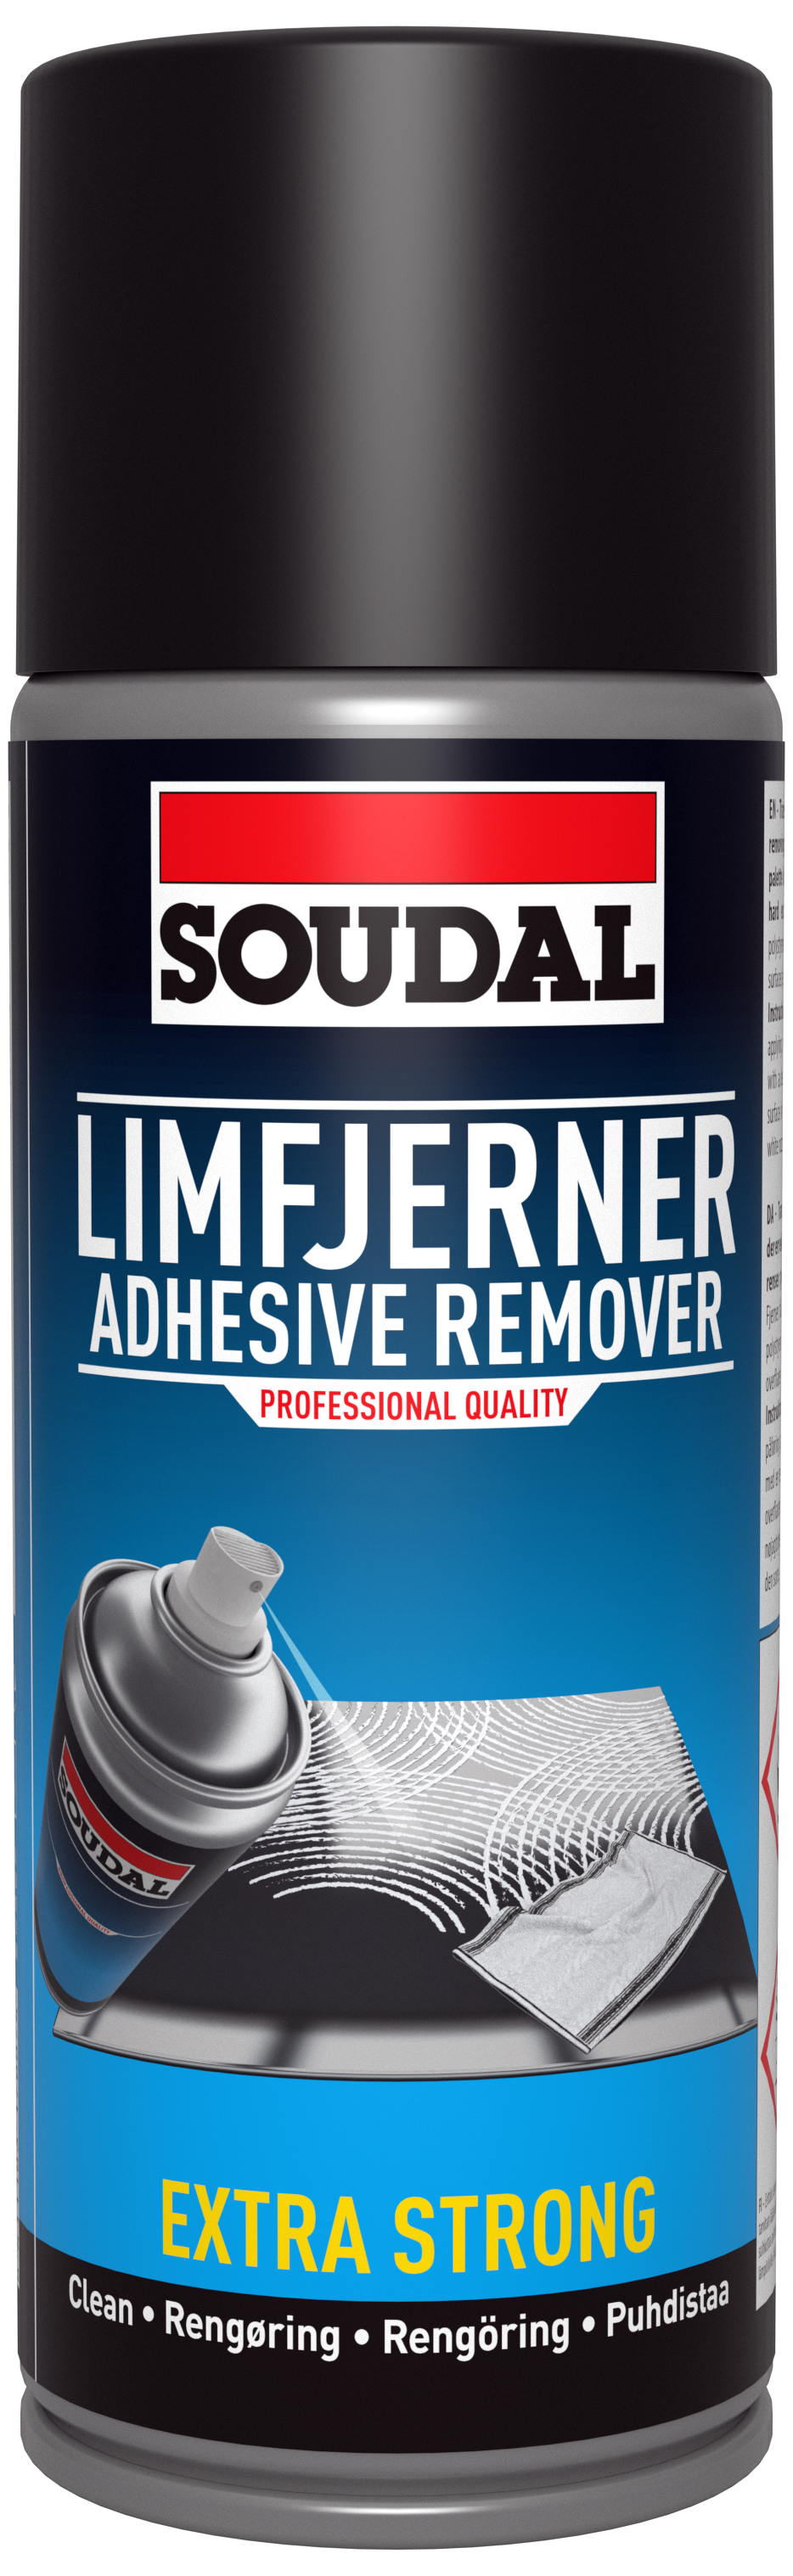 Soudal limfjerner Adhesive Remover spray 400ml 395173